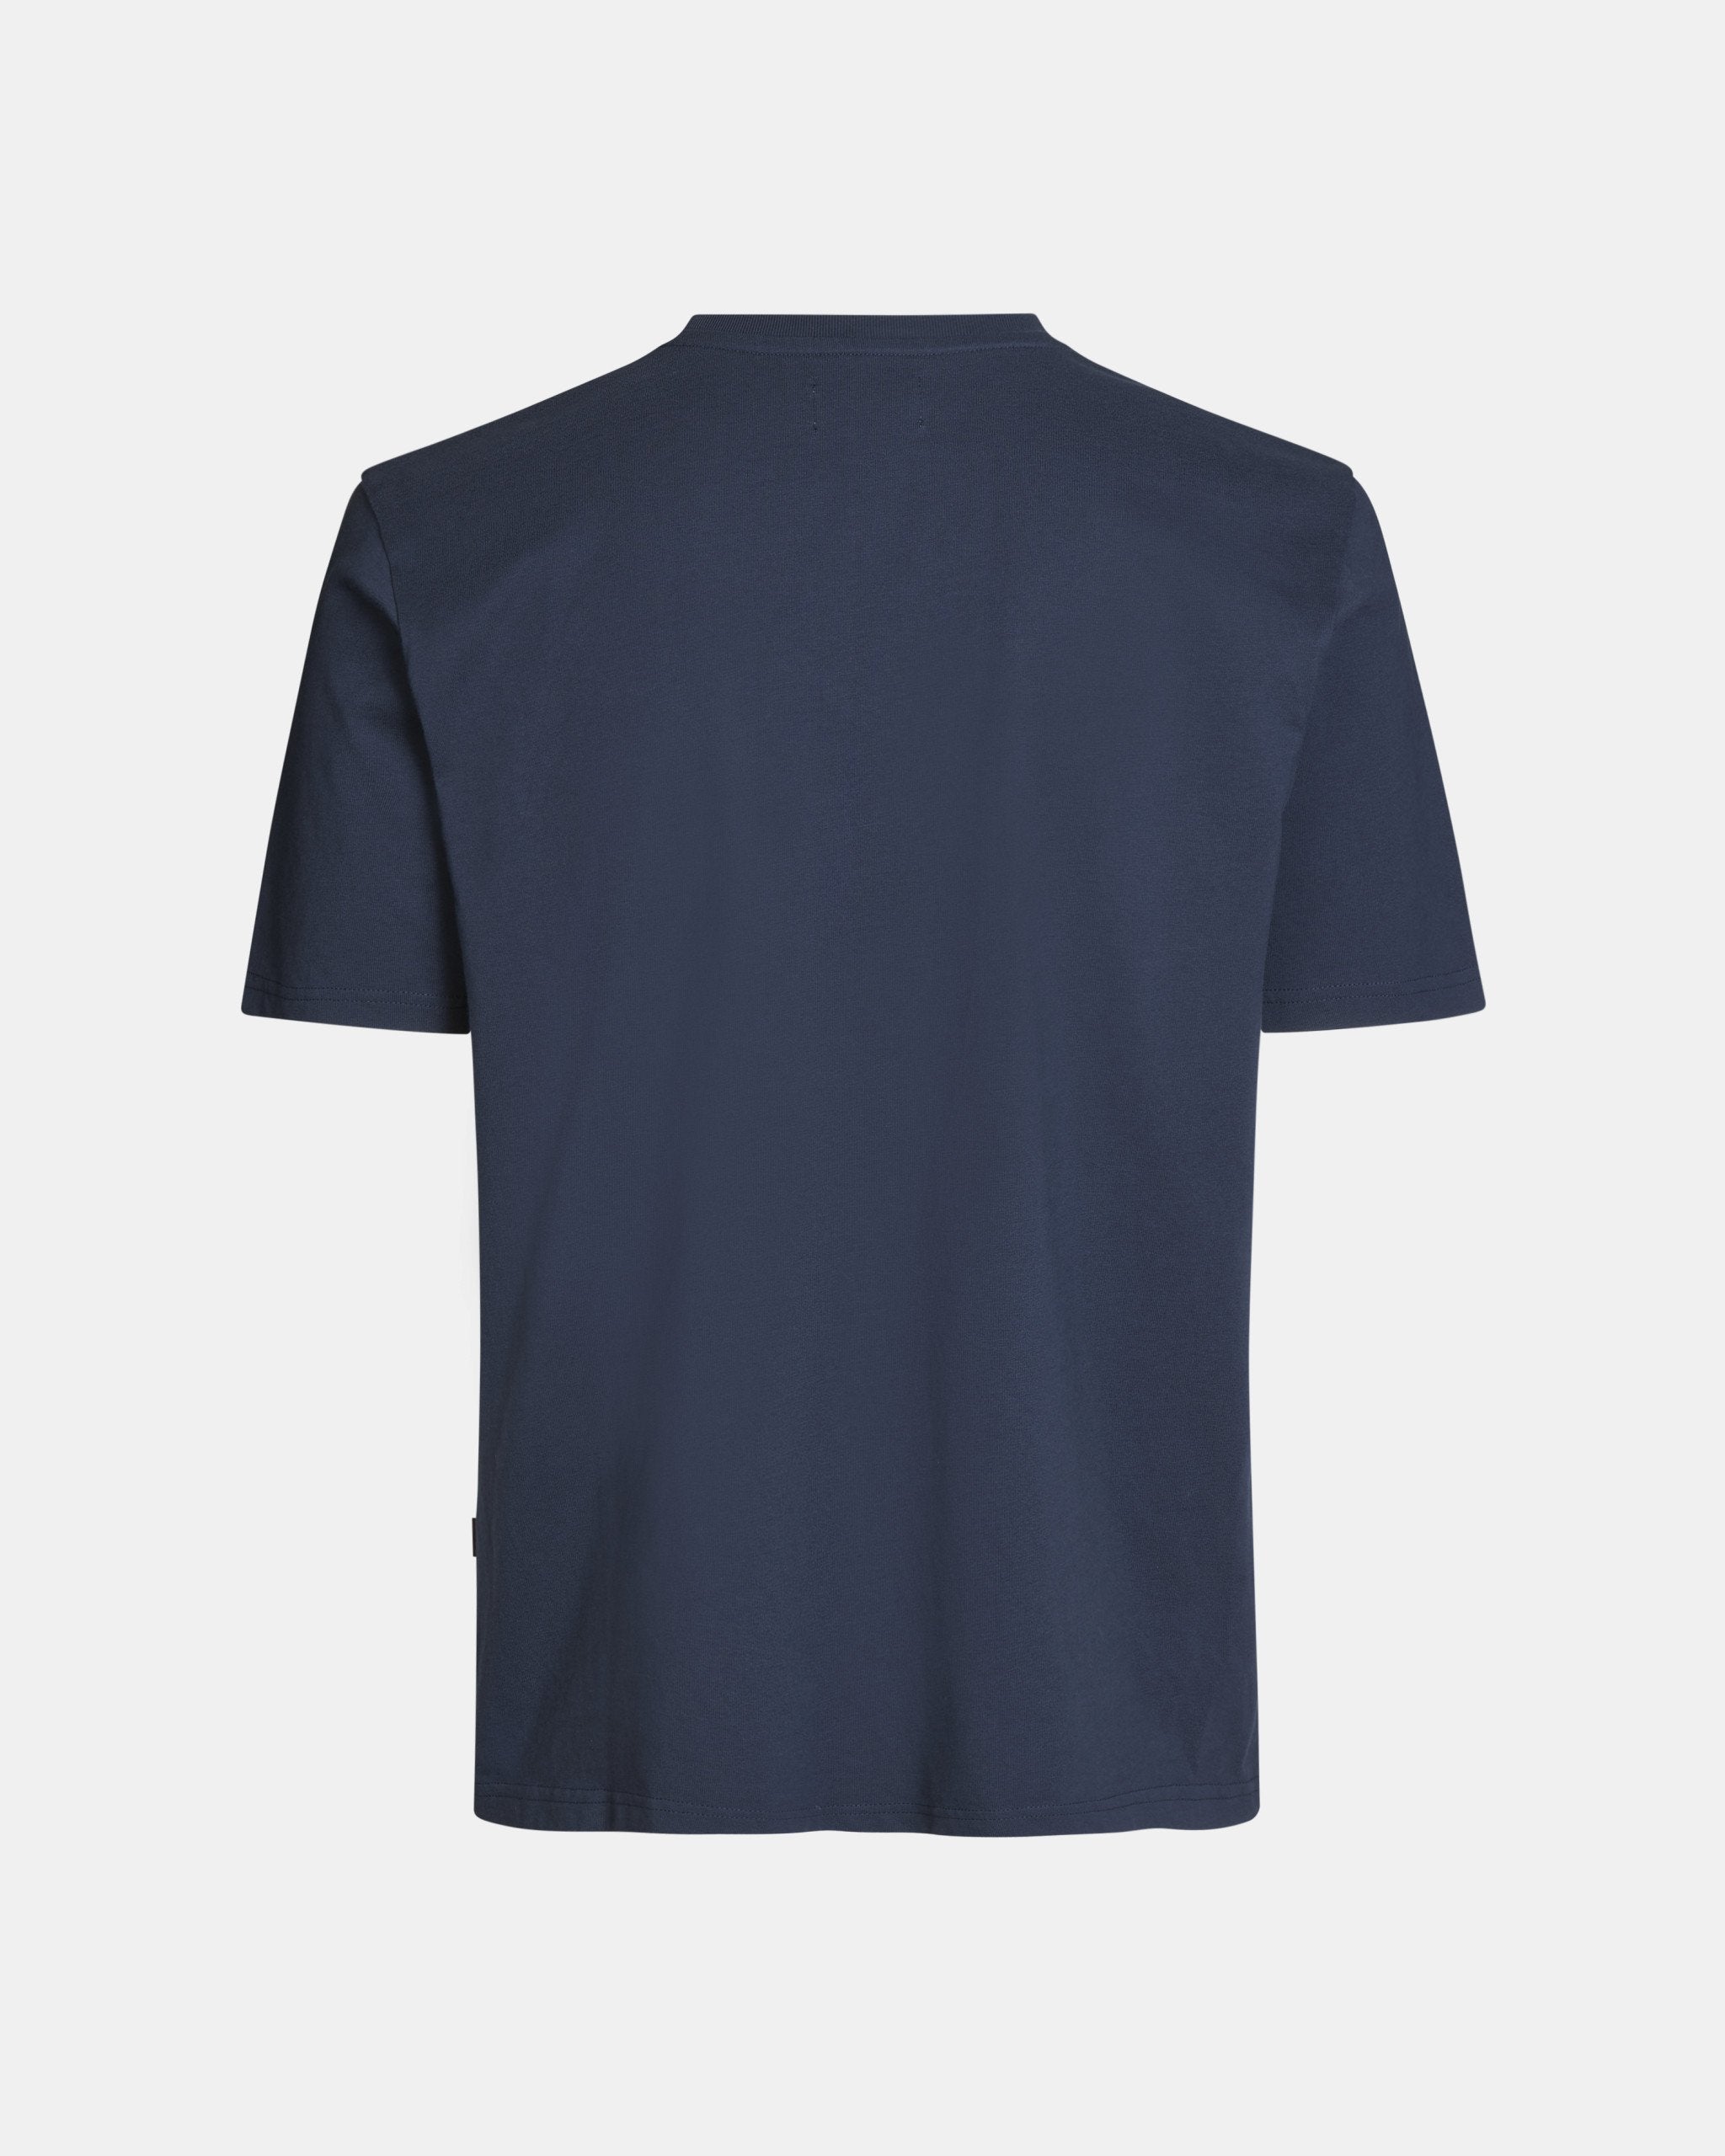 Off-Race Patch T-Shirt - Navy